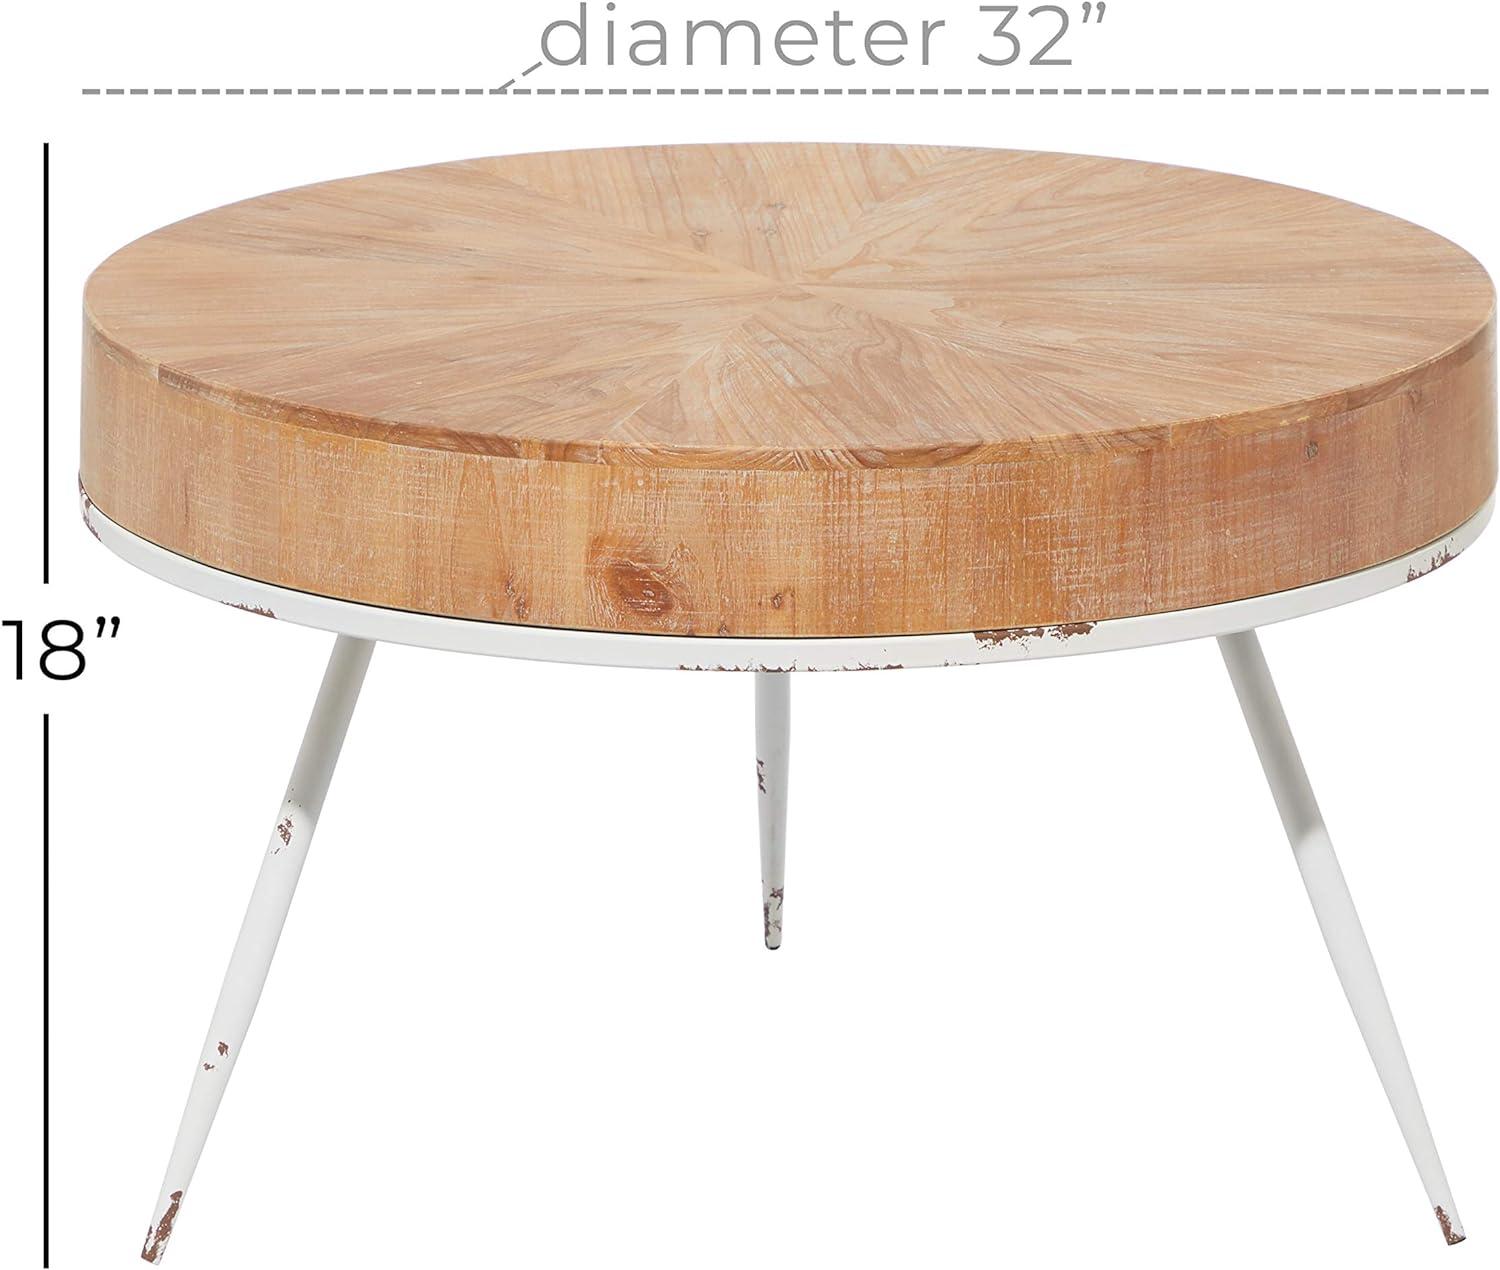 Modern Minimalist Round Coffee Table with White Distressed Iron Legs, 32"W